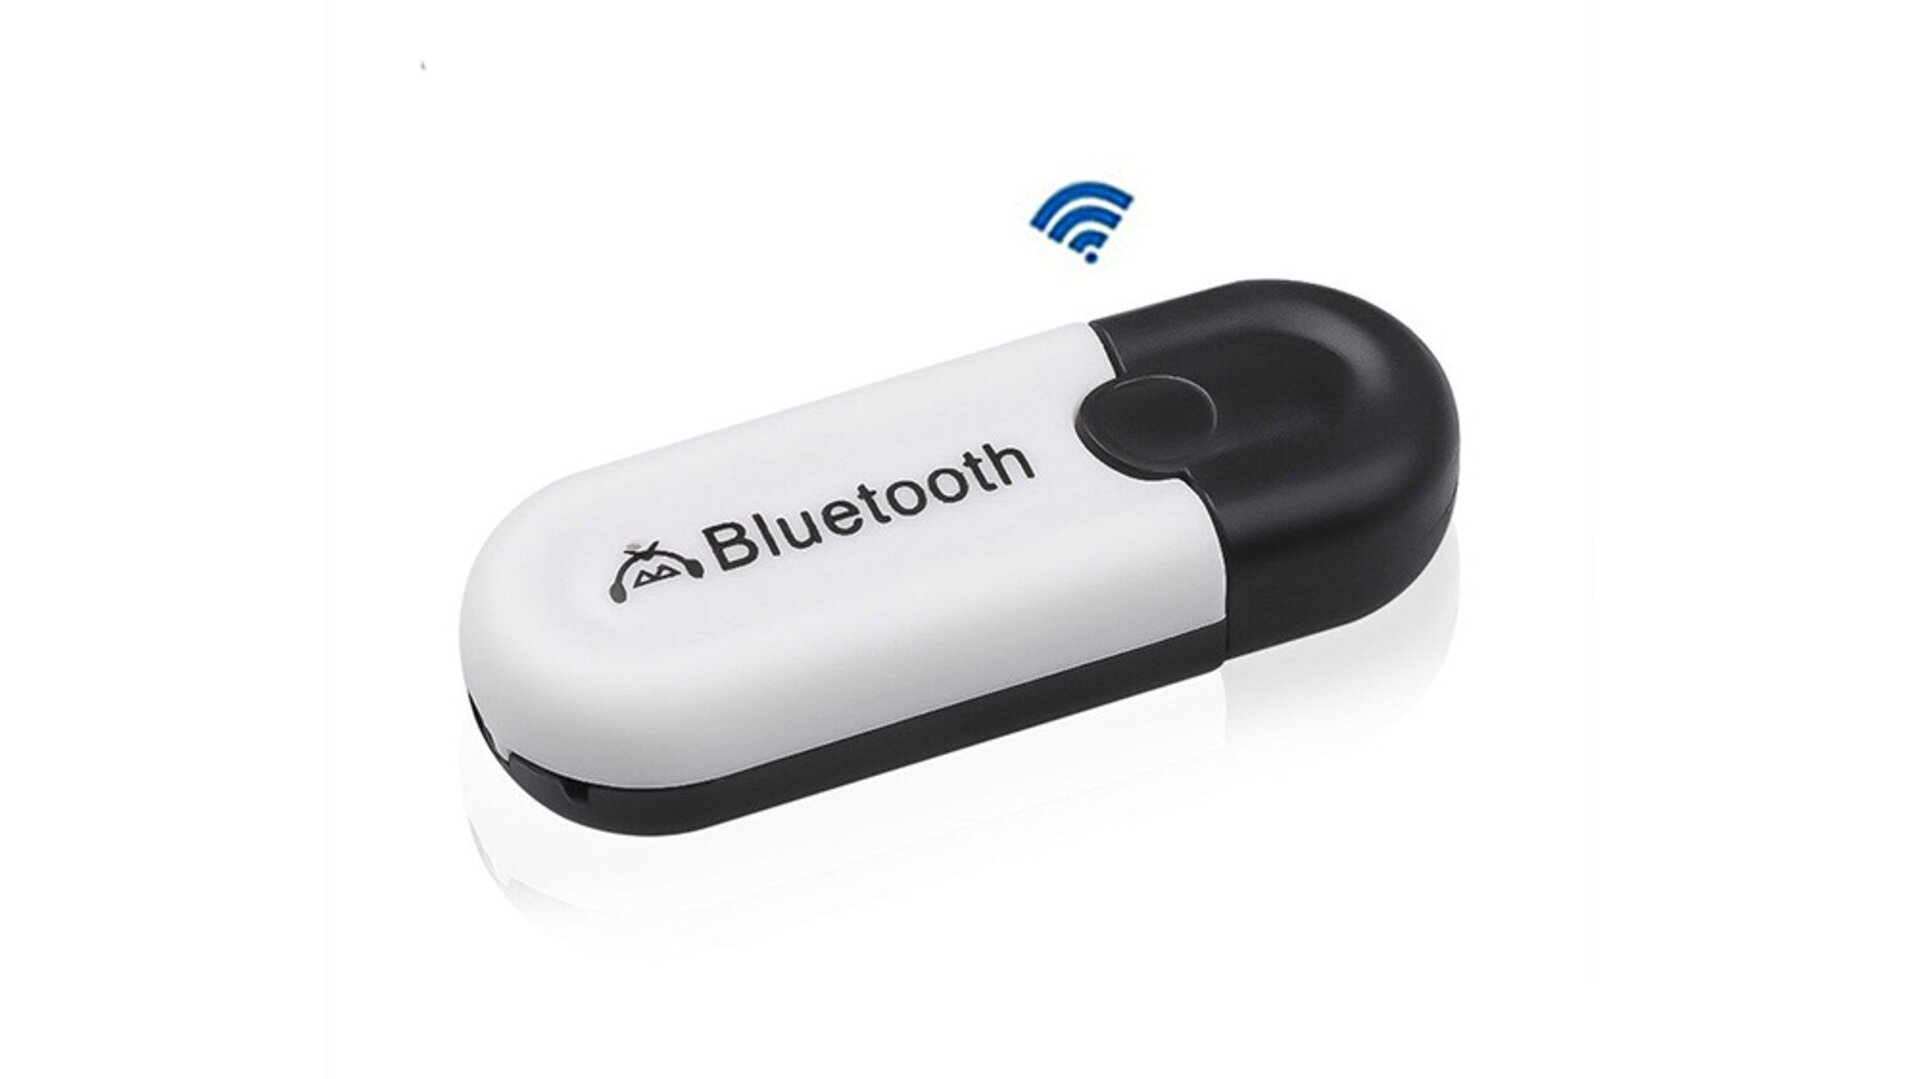 USB Bluetooth dongle 860# ბლუთუზ მიმღები